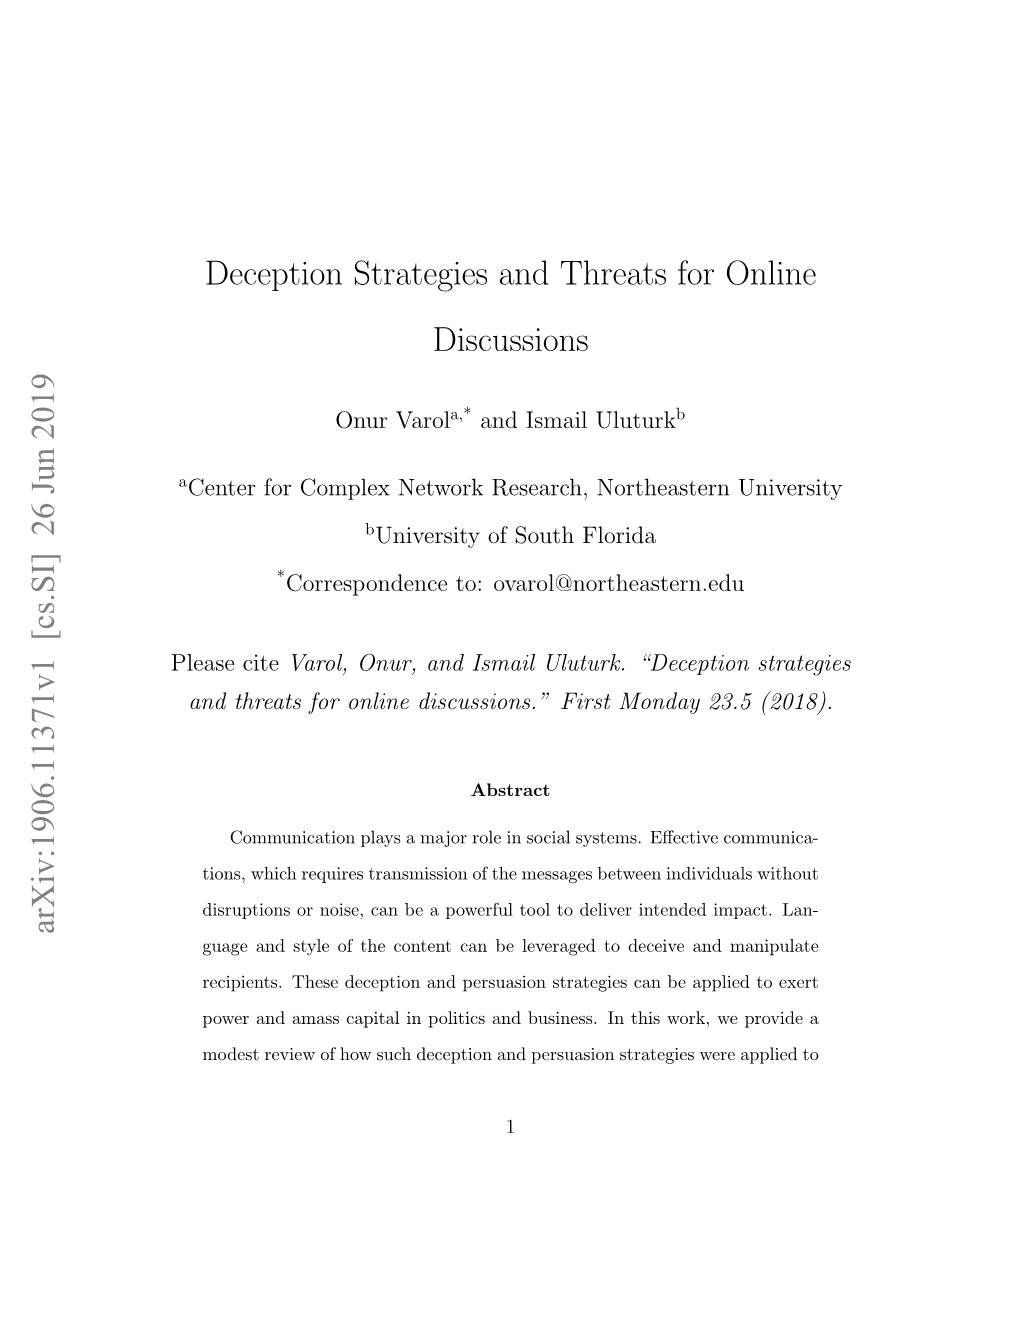 Deception Strategies and Threats for Online Discussions Arxiv:1906.11371V1 [Cs.SI] 26 Jun 2019